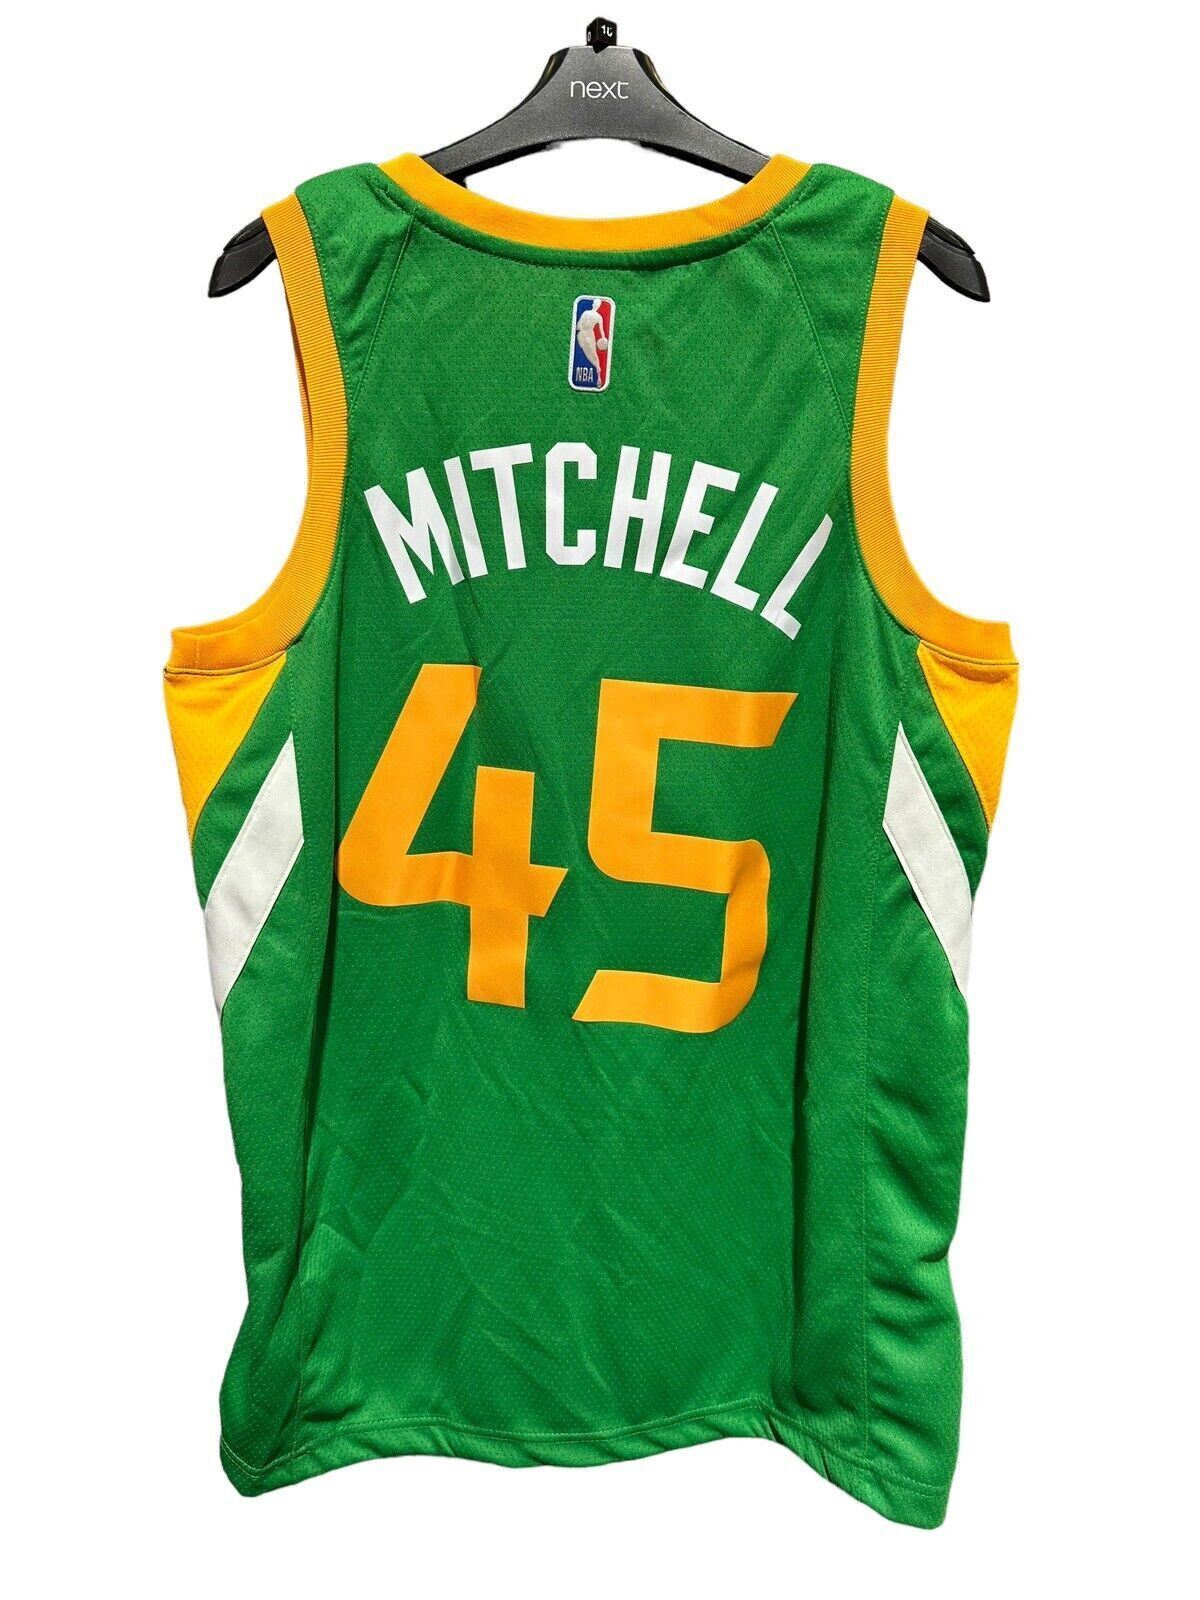 Nike NBA Utah Jazz Earned Edition Jersey MITCHELL 45 Basketball Mens Medium